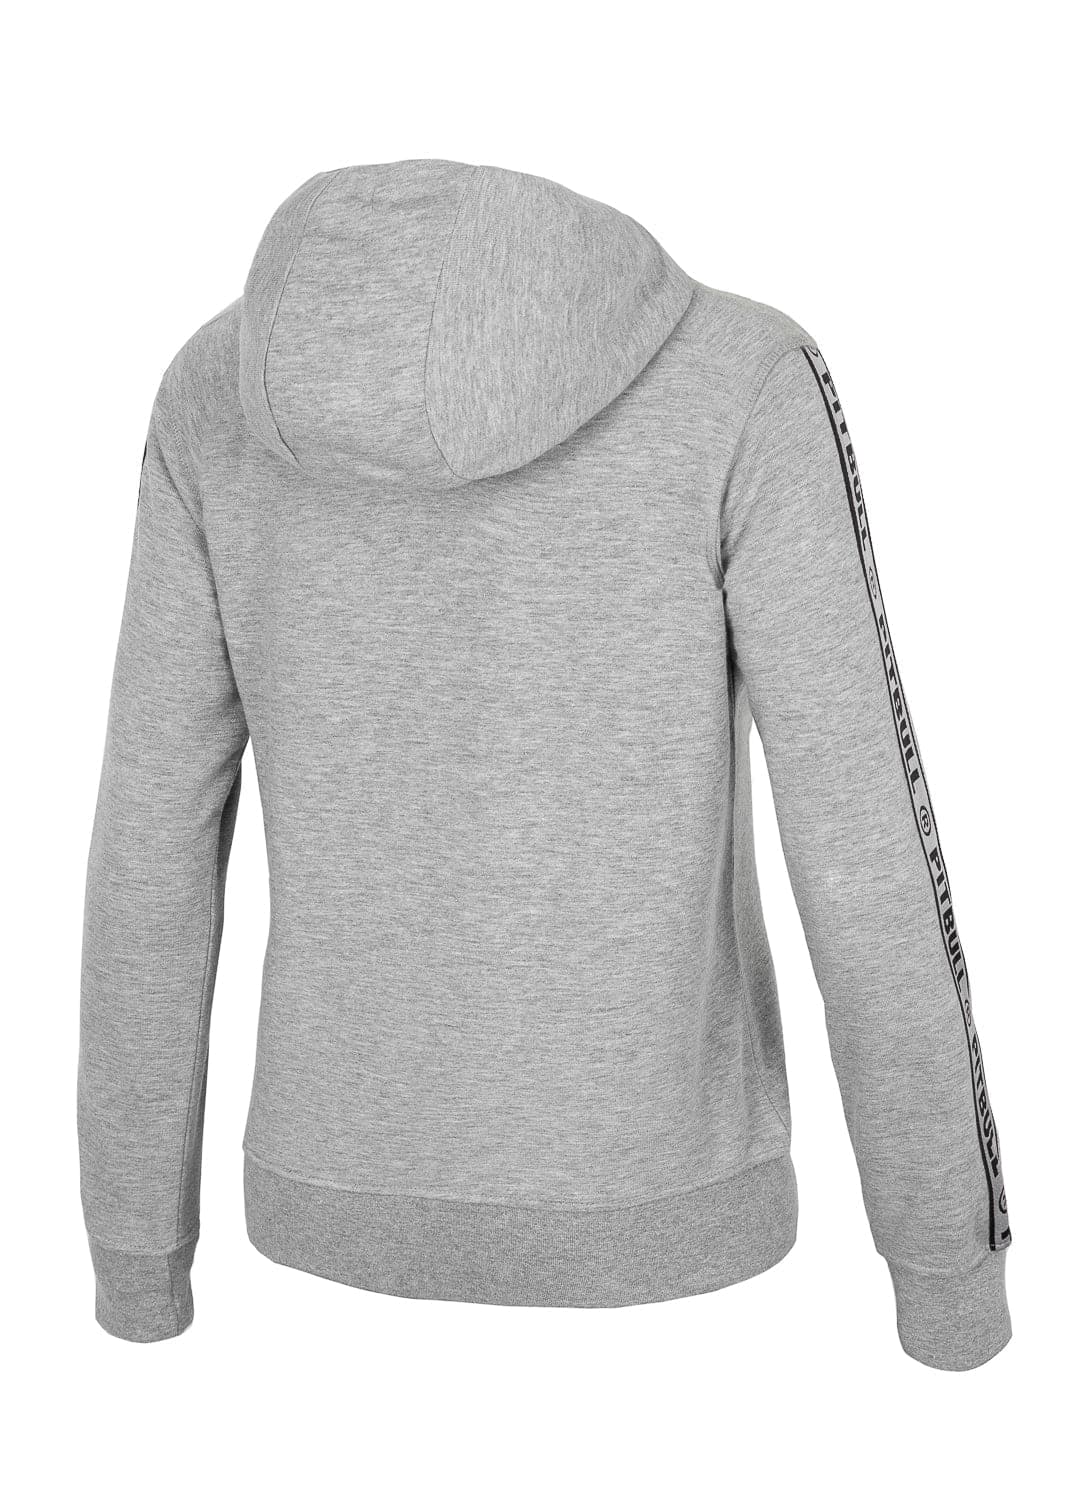 Women's hooded zip GWEN Grey - Pitbull West Coast International Store 